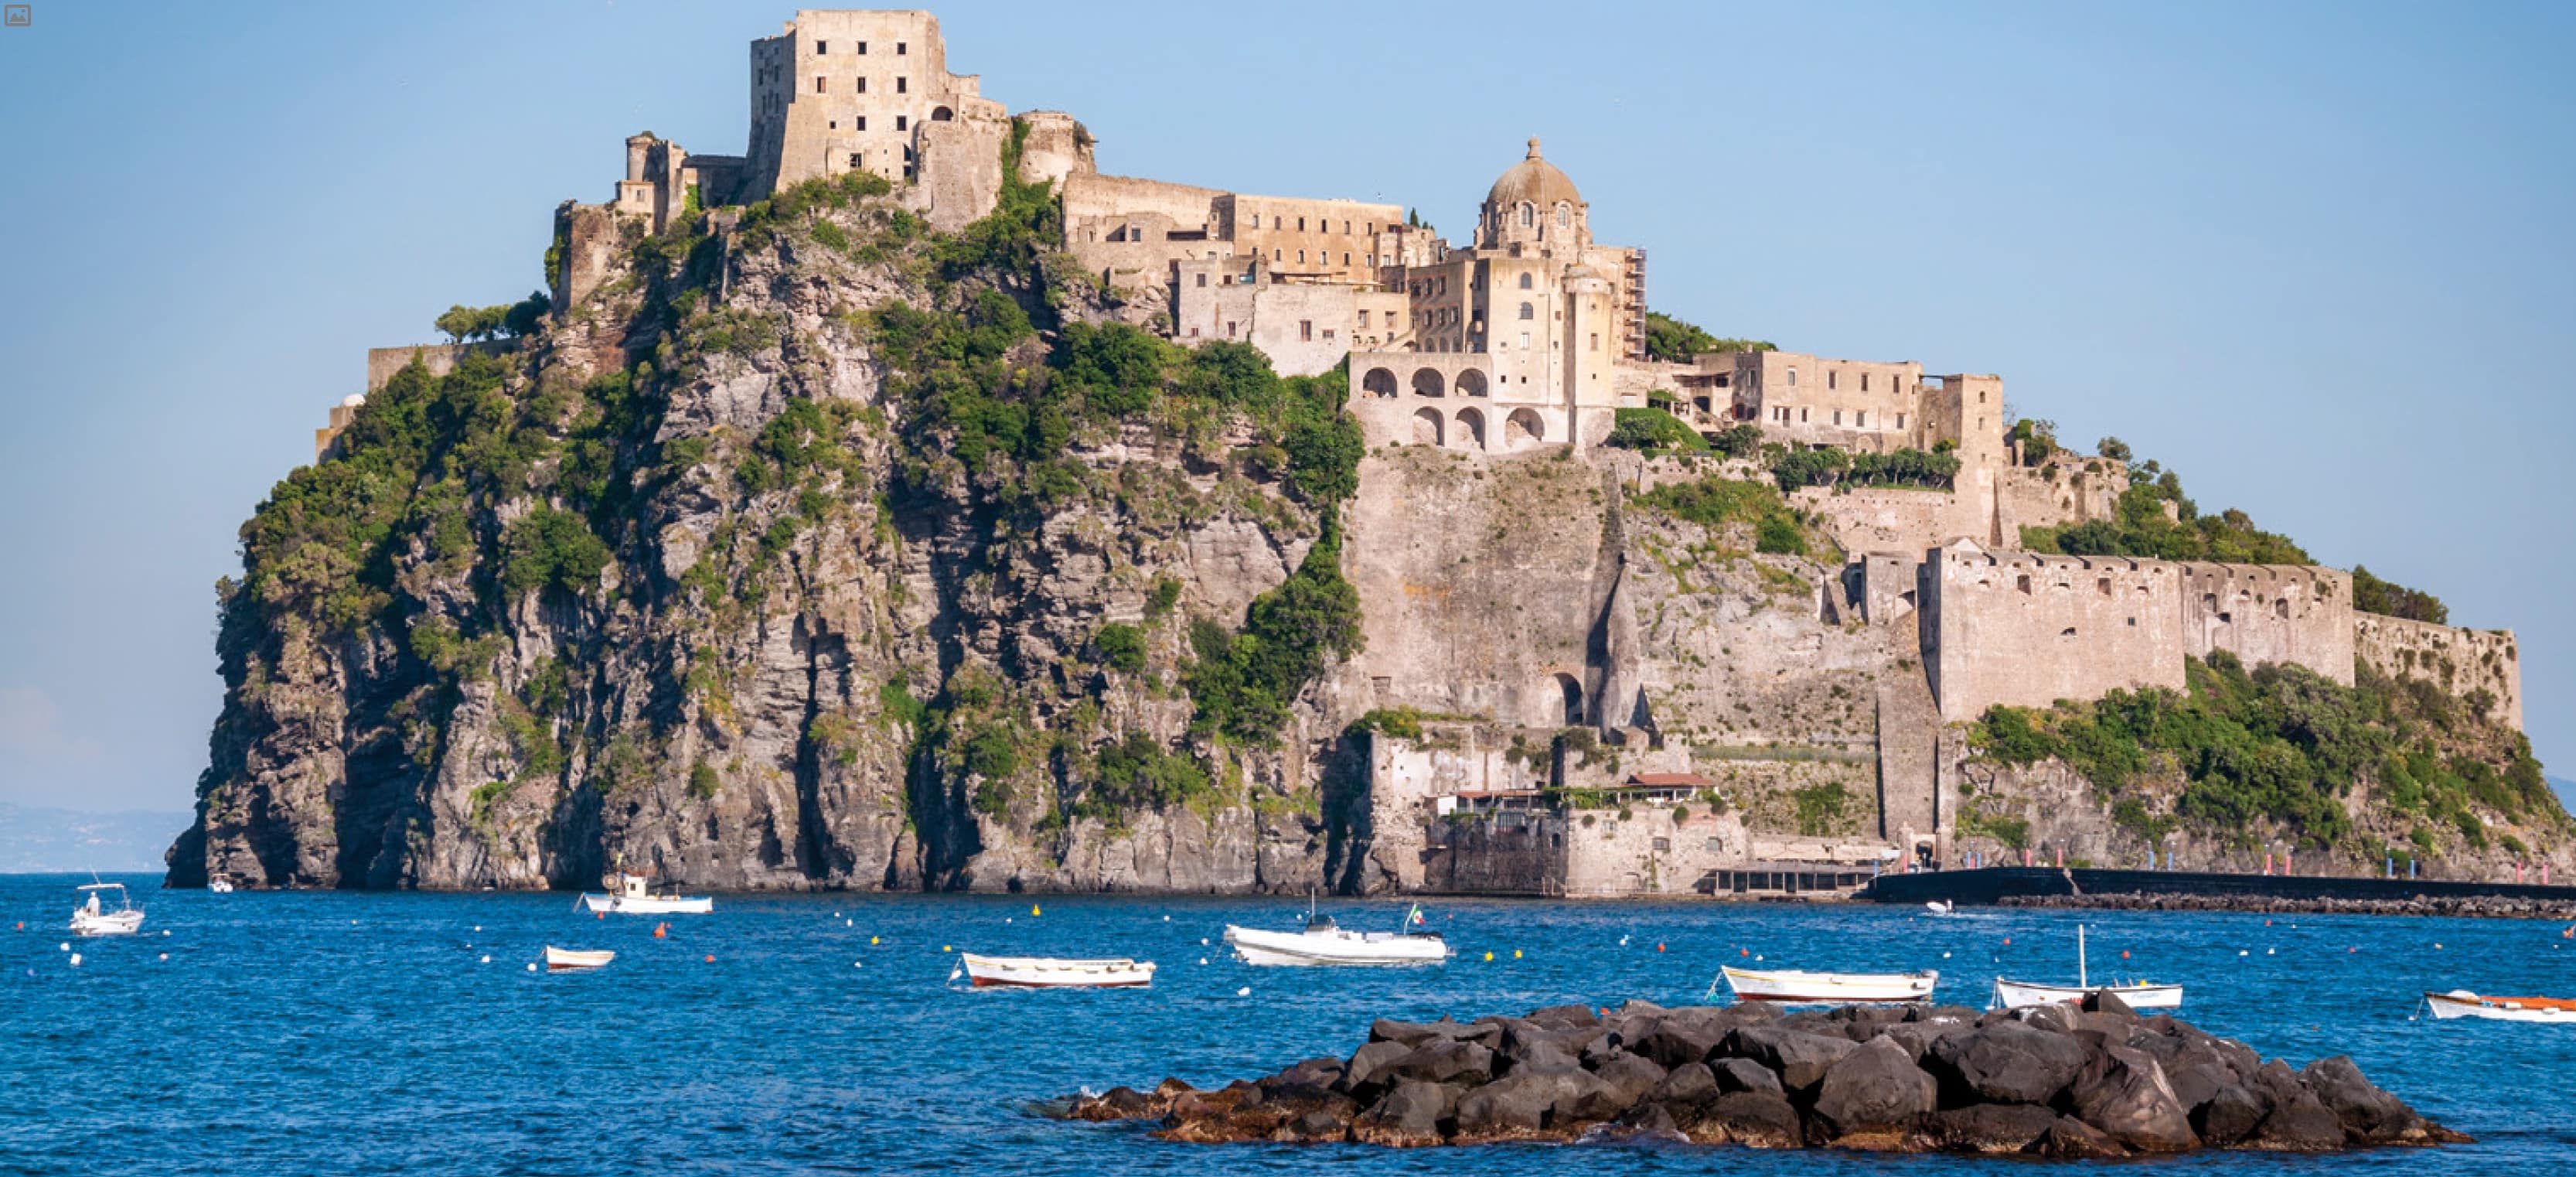 Photo of Aragonese Castle in Ischia, Italy